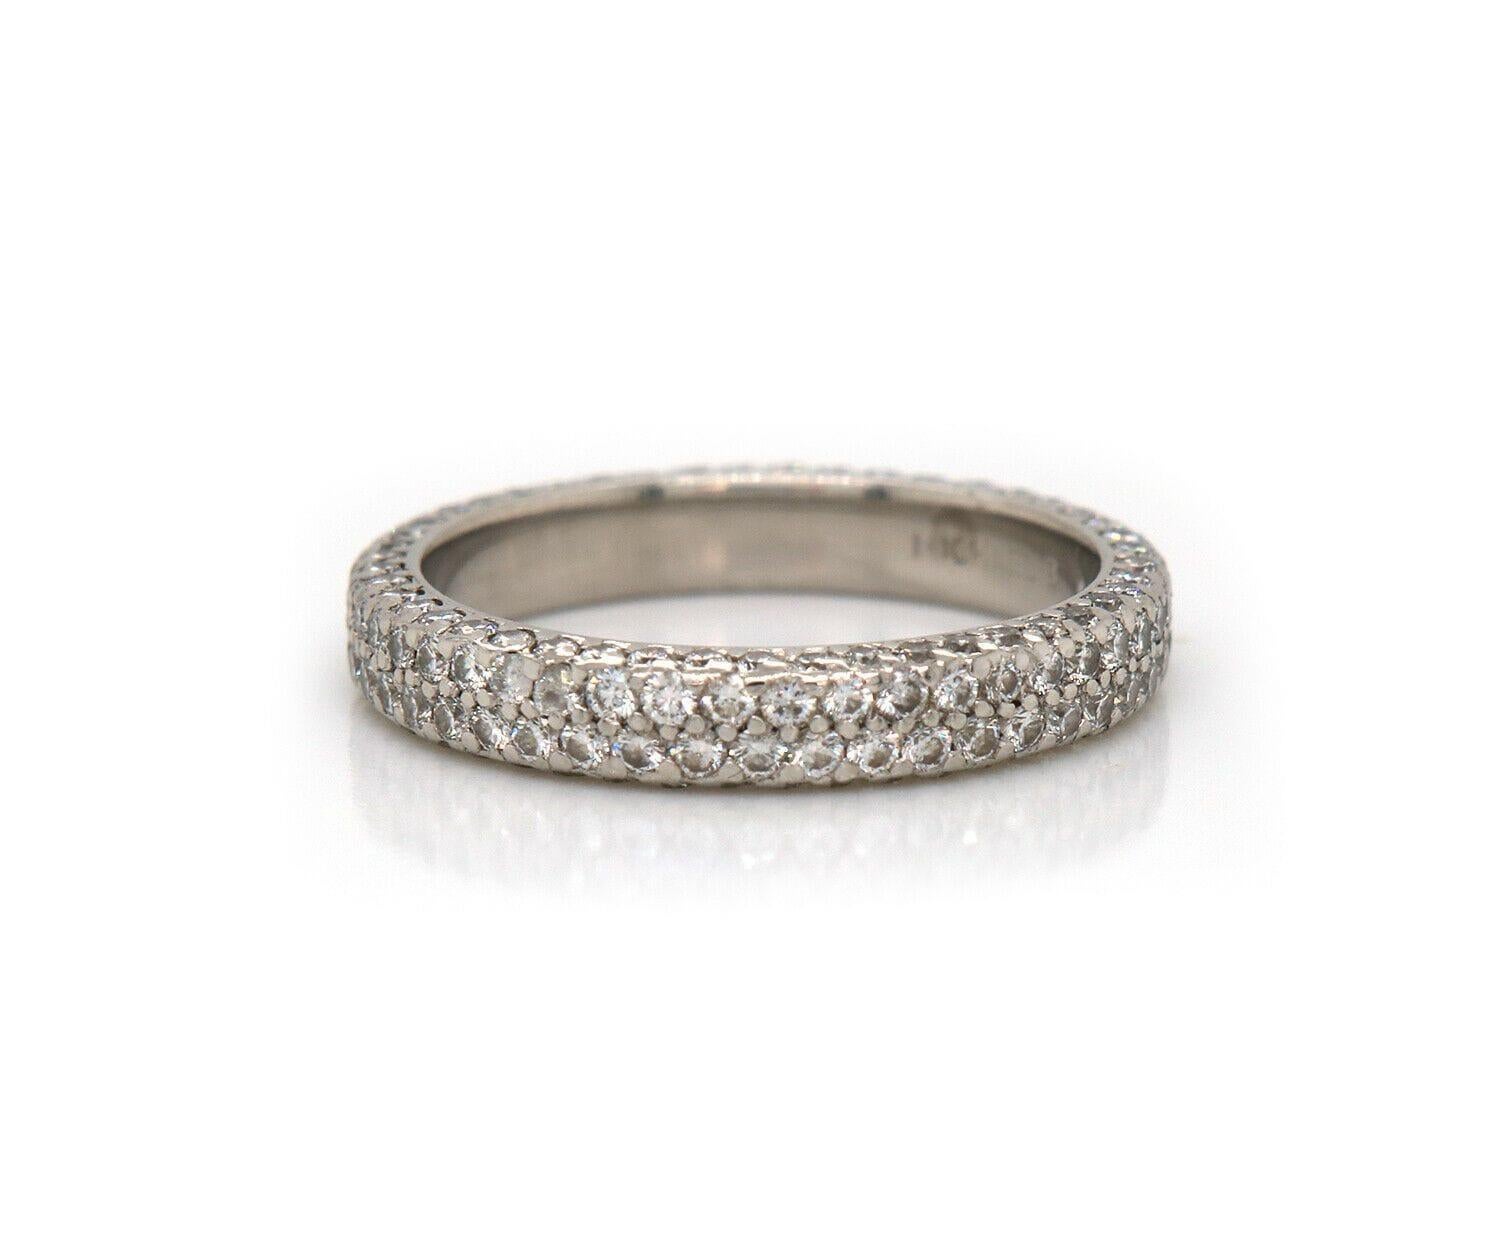 Michael B. Pave Diamond Flat Band Ring in Platinum

Michael B. Pave Diamond Flat Band ring
.950 Platinum
Diamonds Carat Weight: Approx. 0.85ctw
Band Width: Approx. 3.4 MM
Ring Size: 6.25 (US)
Weight: Approx. 5.40 Grams
Stamped: MICHAEL B.,